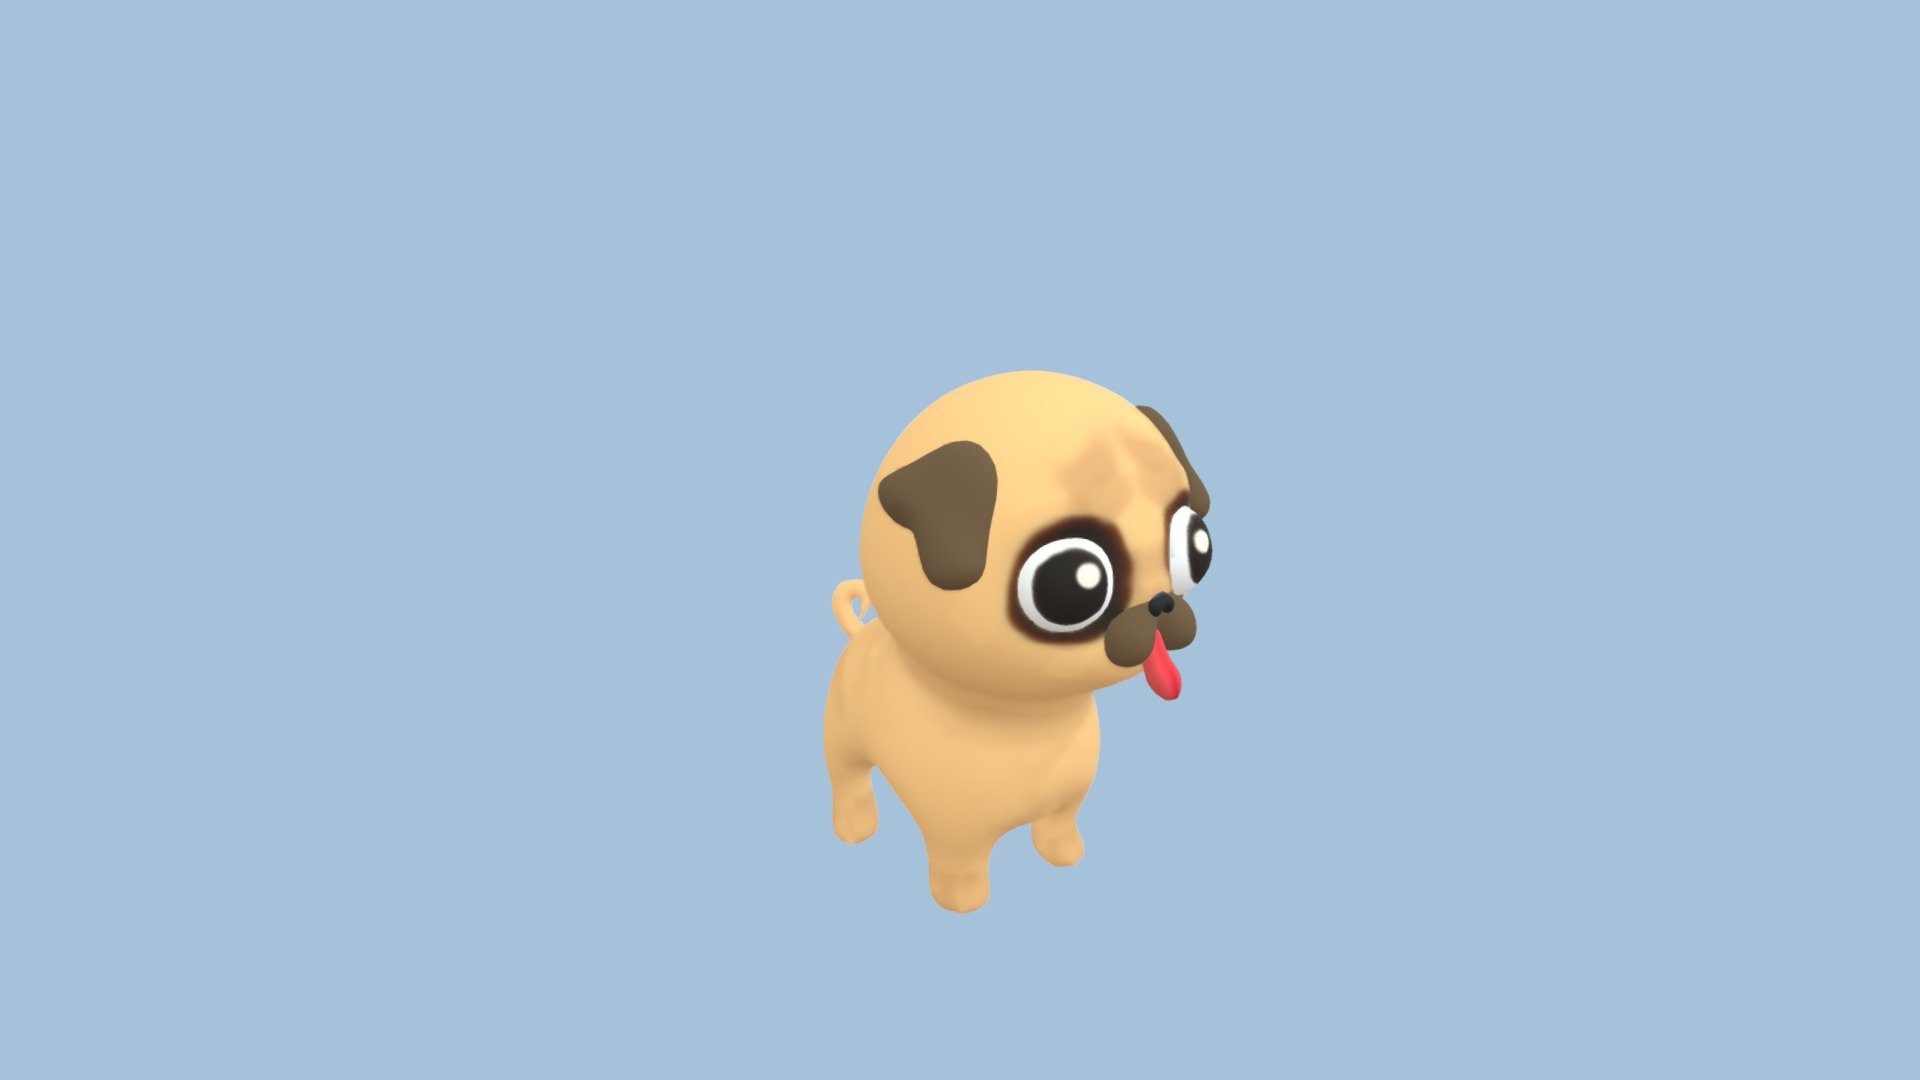 Cartoon pug model for free use.
Ig: @ordenmoria - Cute pug - Download Free 3D model by ordenmoria 3d model